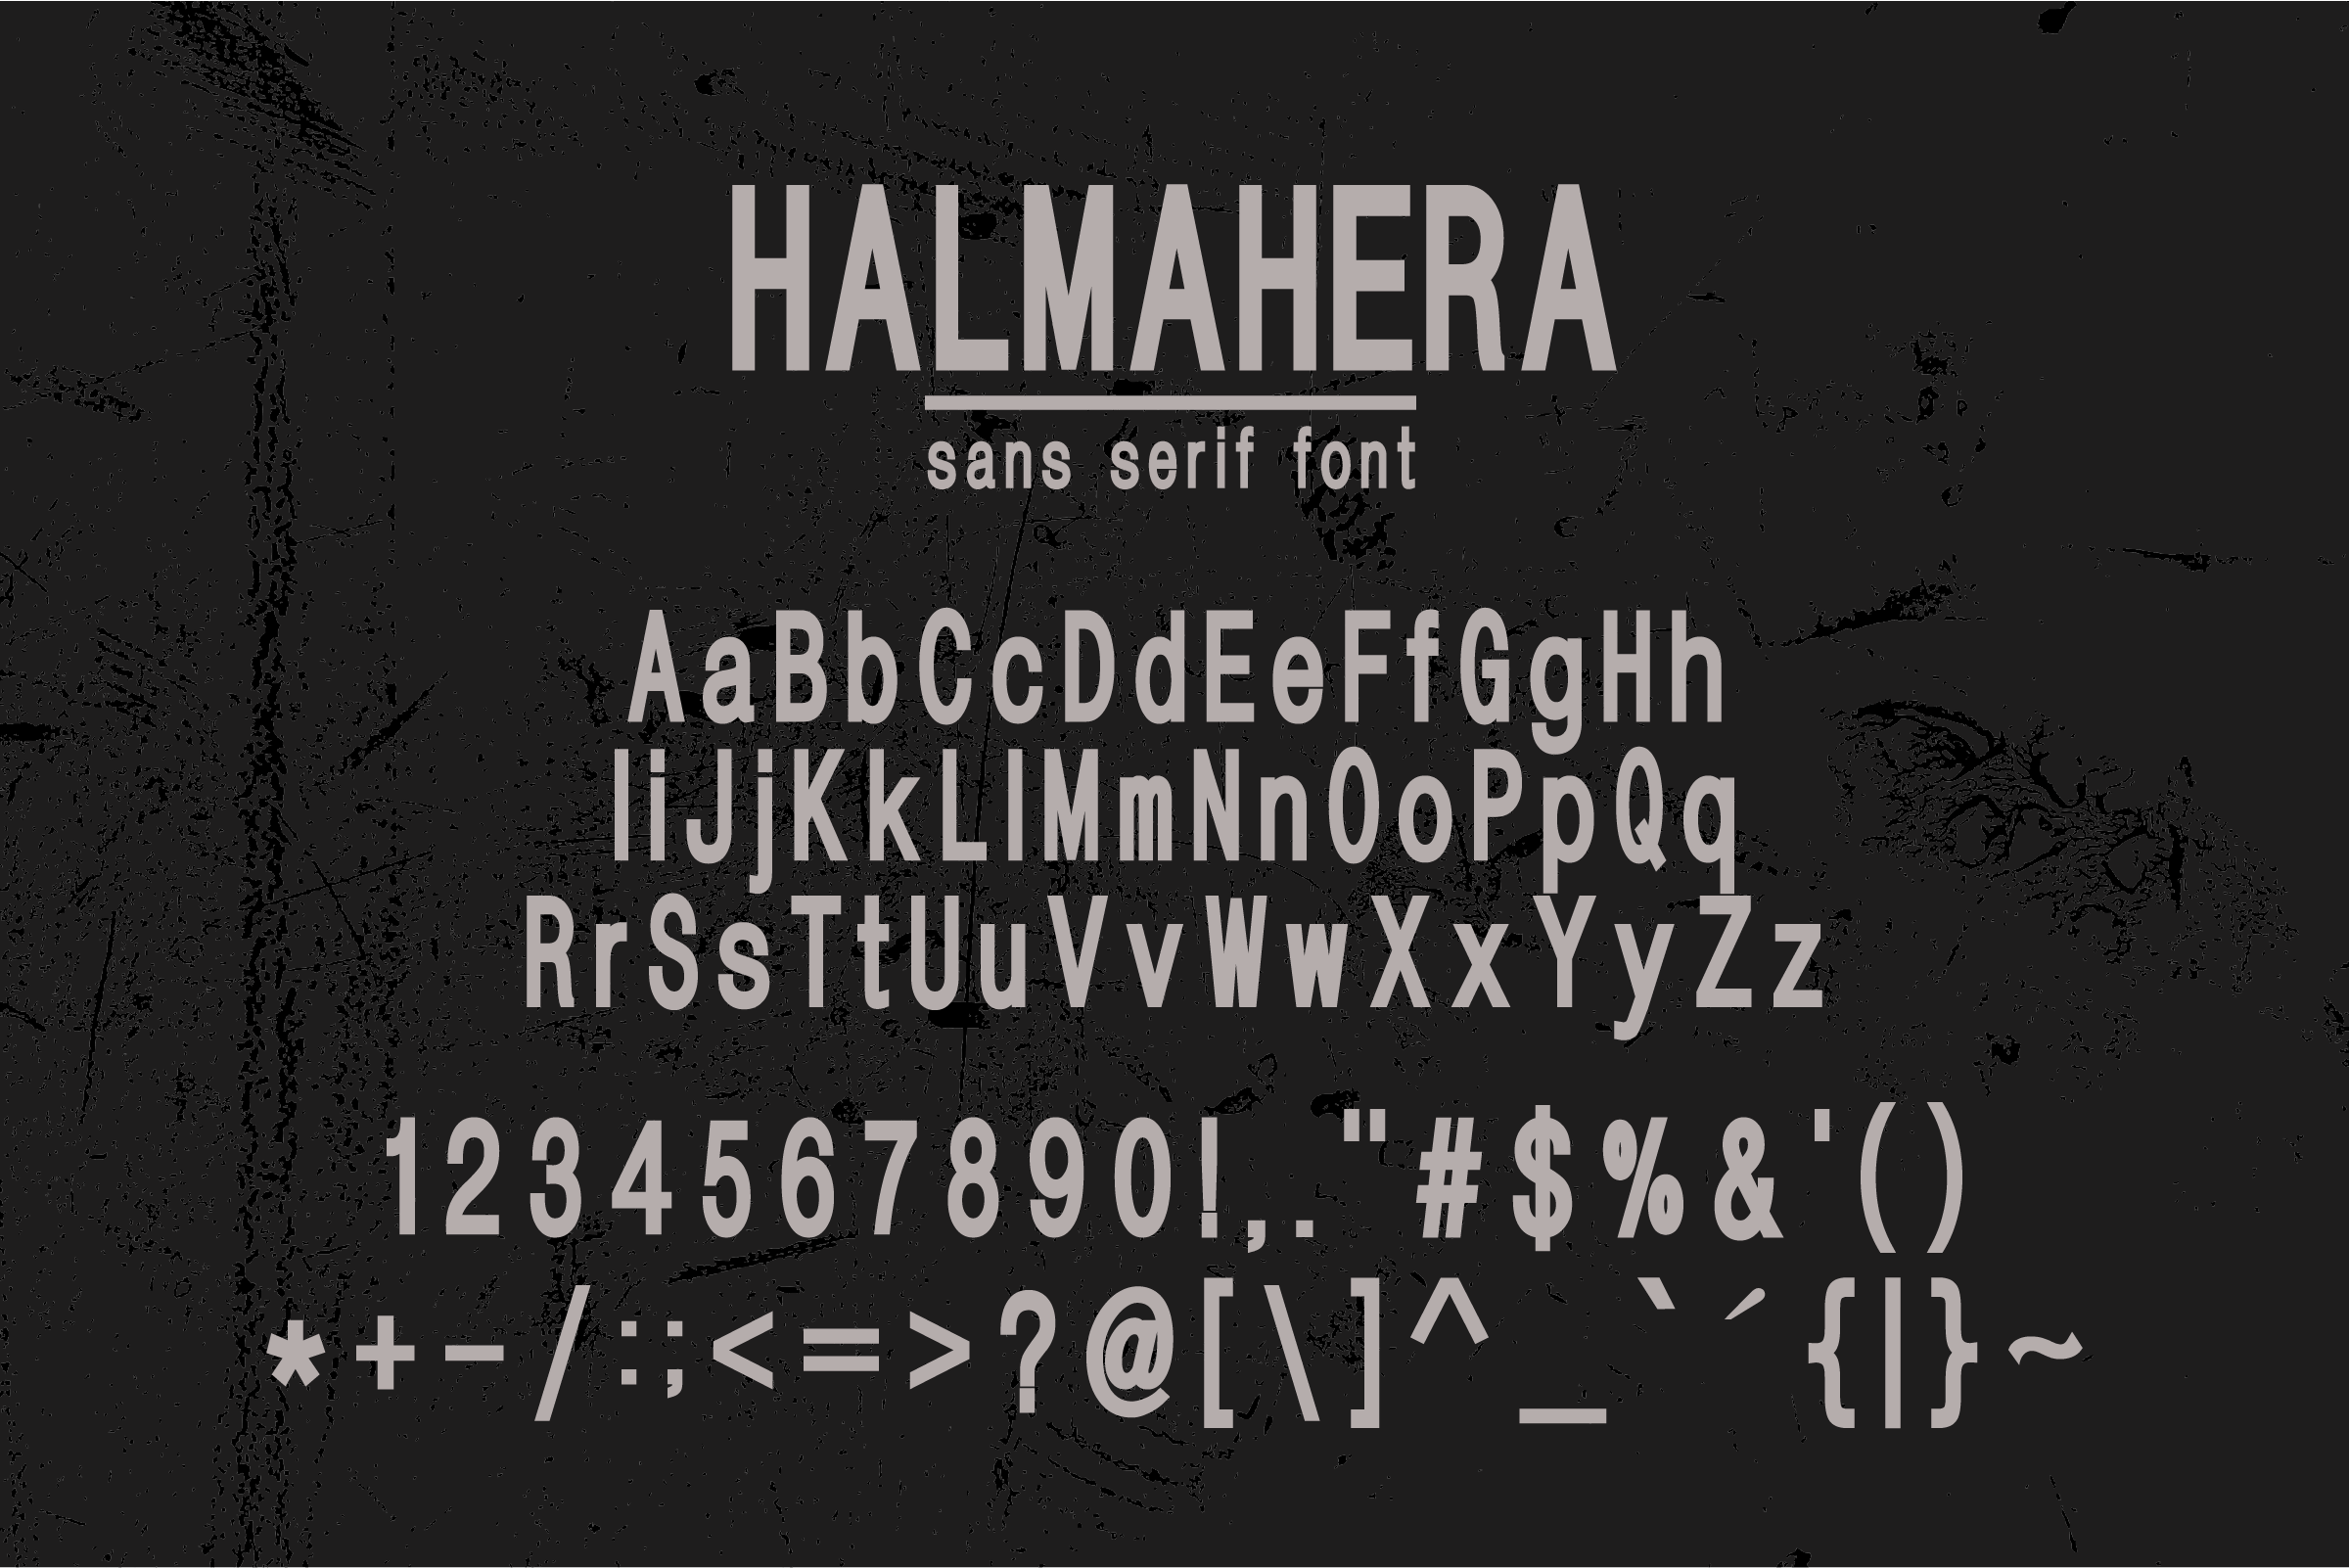 Halmahera Sans Serif